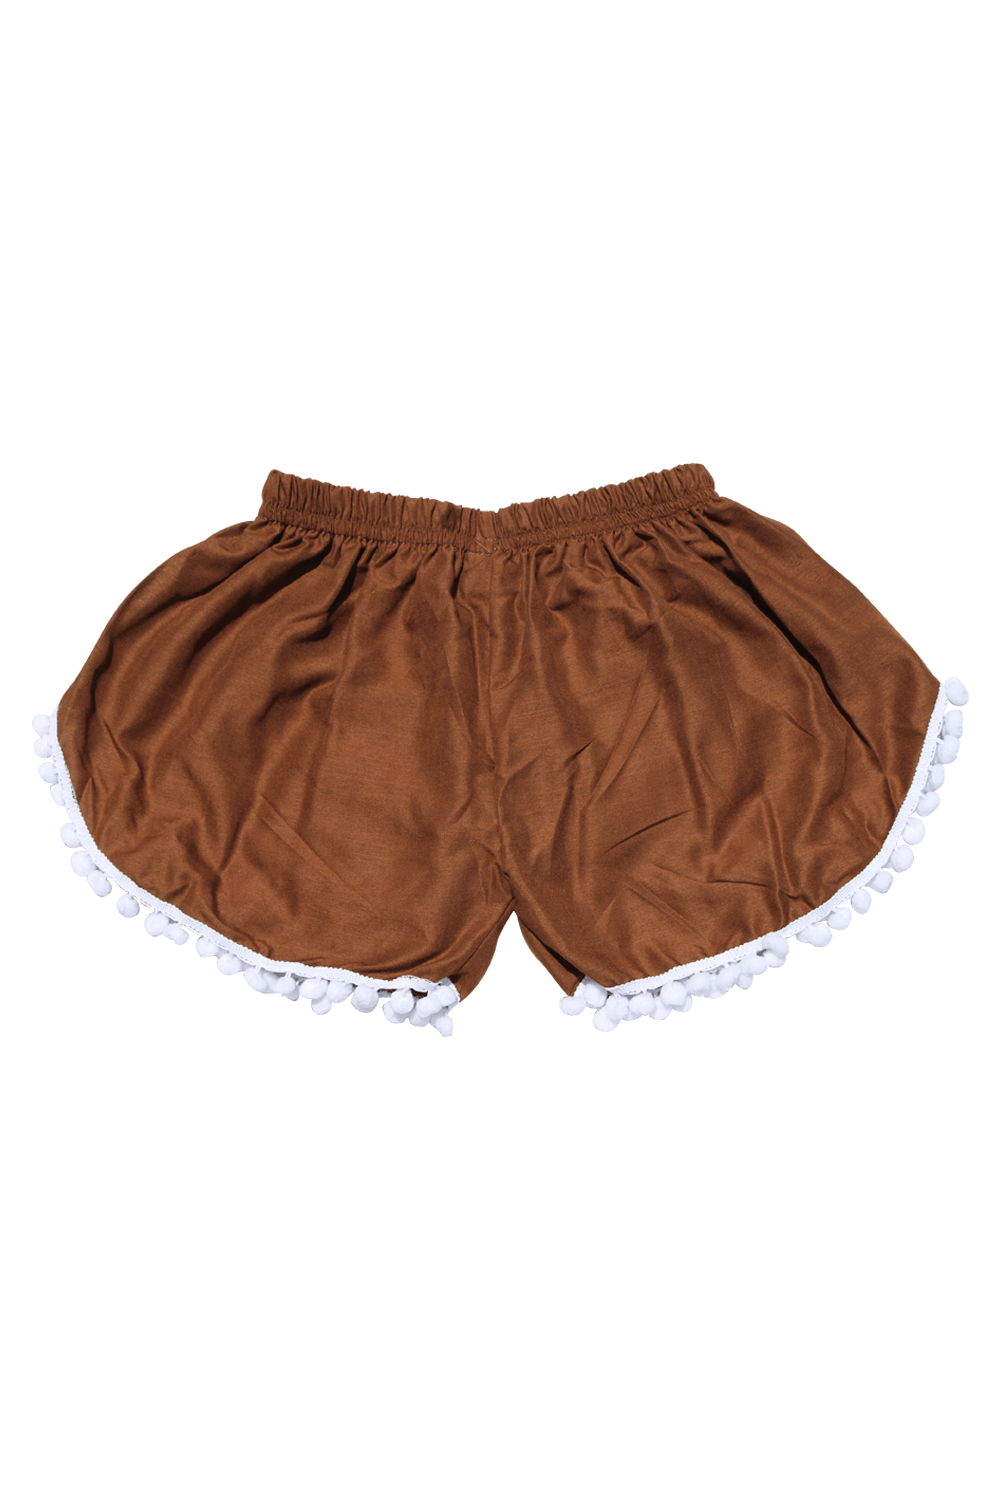 Brown pompom shorts. Boho shorts from Bohemian Island